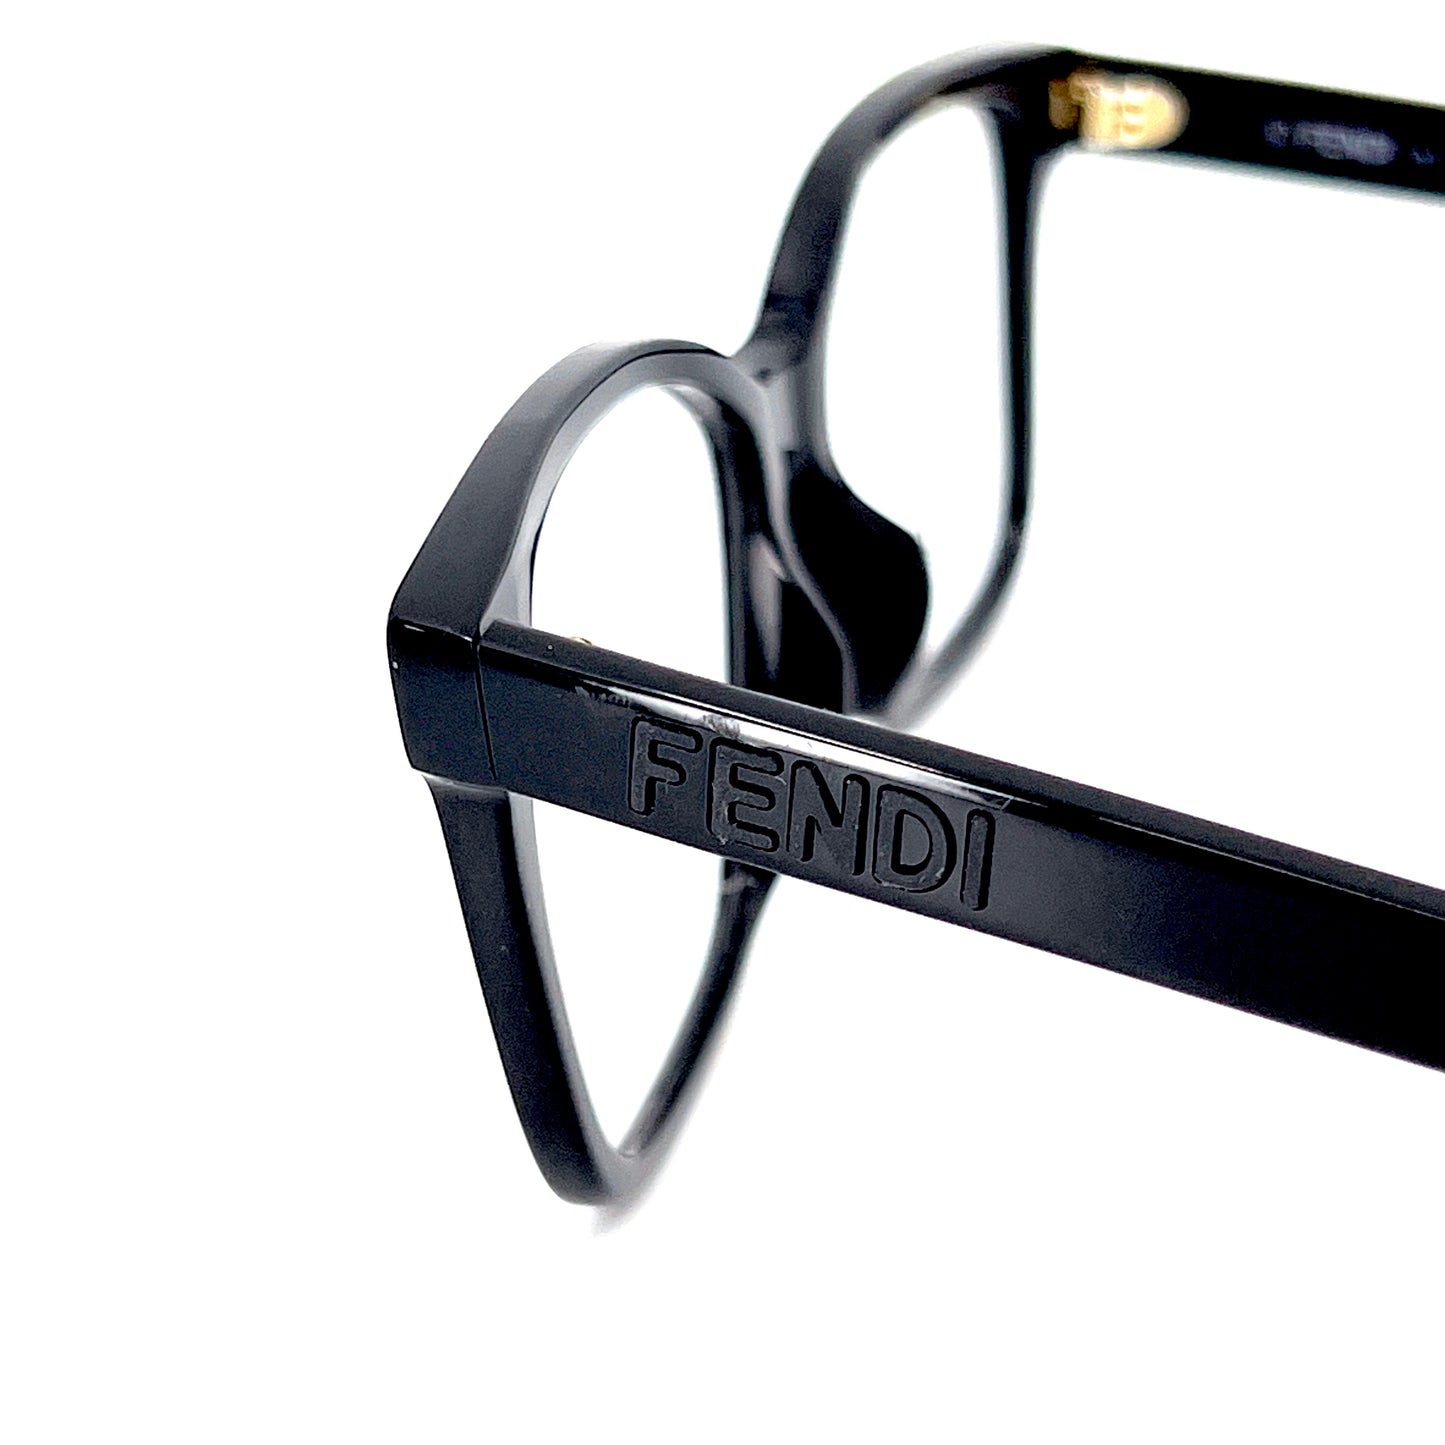 FENDI Eyeglasses FE50016I 001